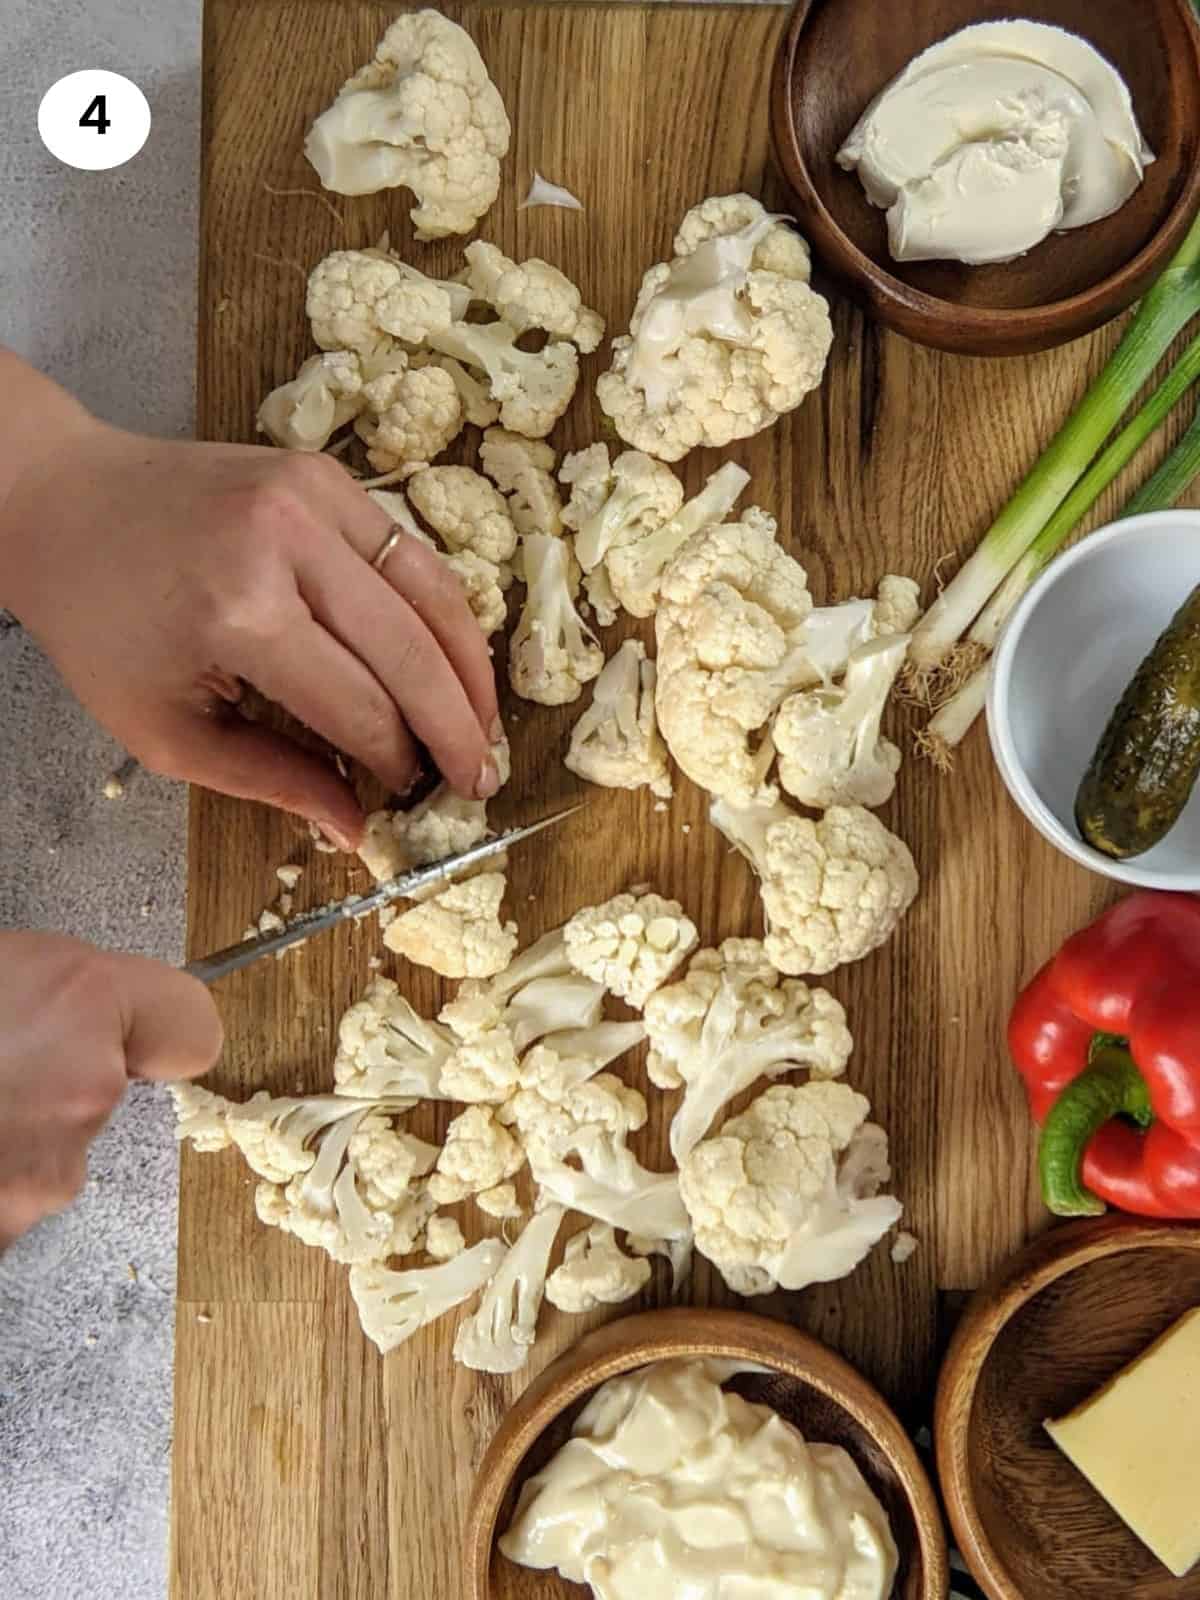 How to cut cauliflower into bite sized pieces.